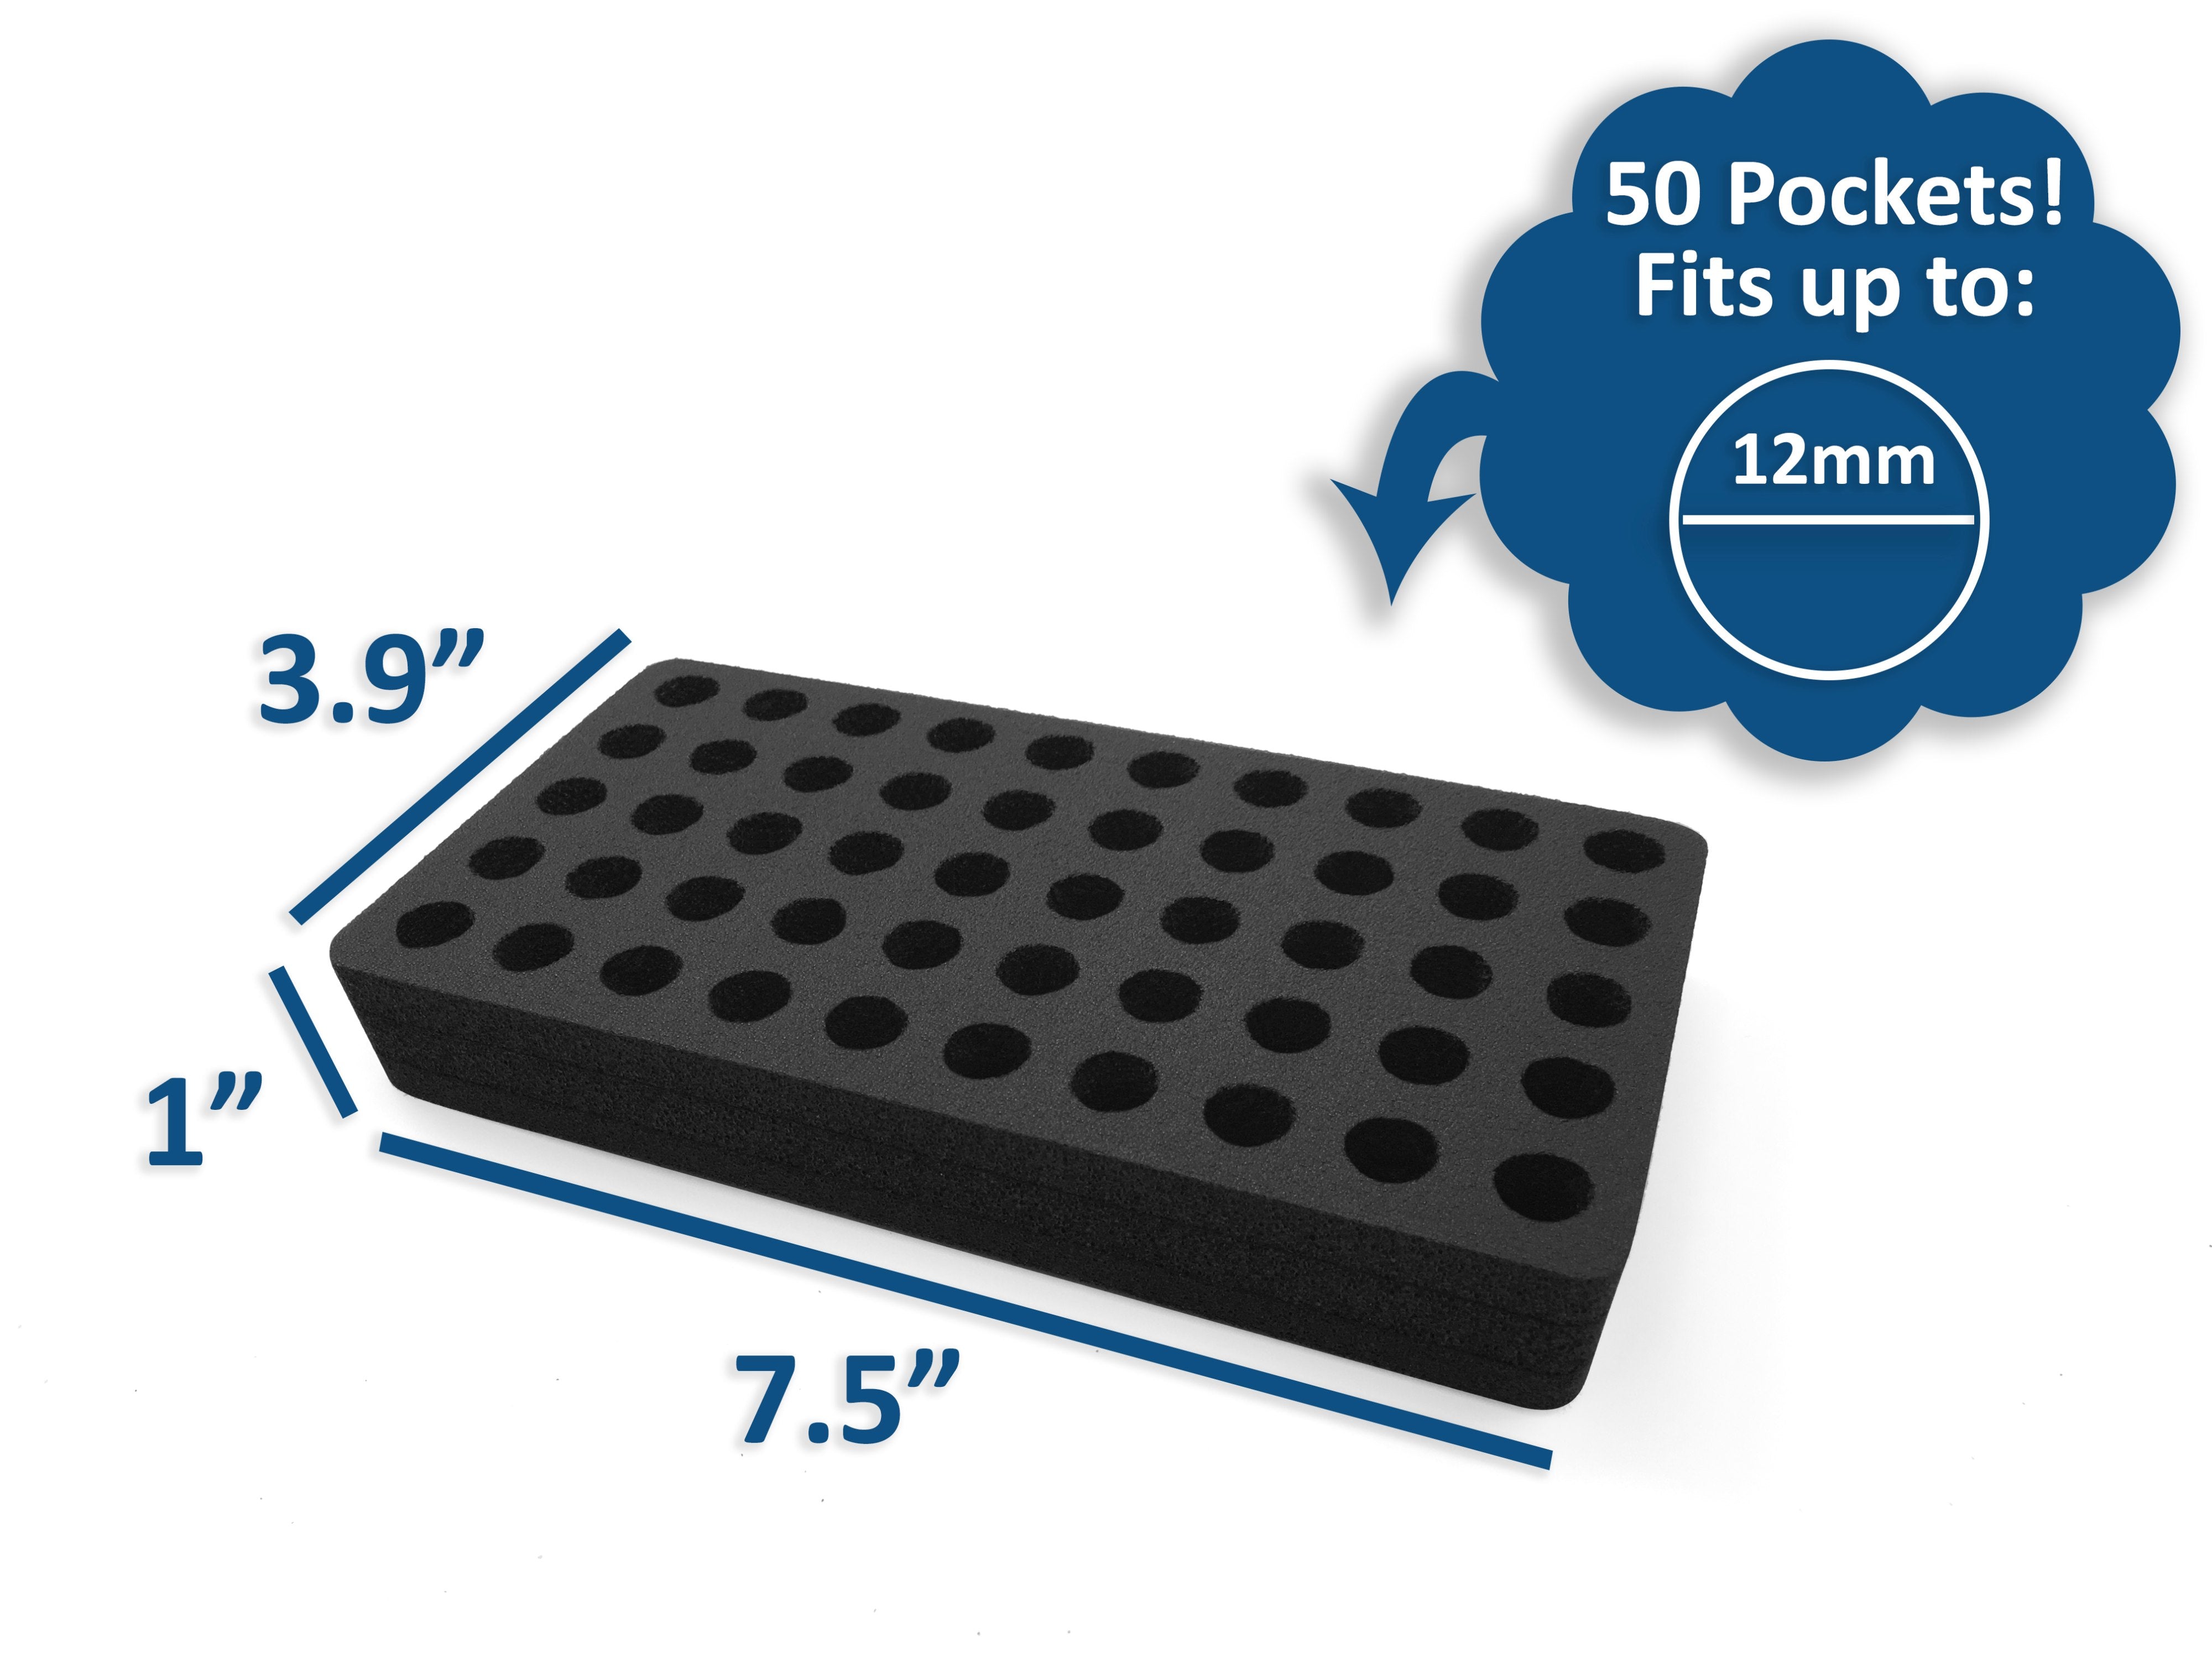 Centrifuge Vial Organizer Black Foam Storage Rack Stand Transport Holds 50 Vials Fits up to 12mm 2ml Diameter Tubes